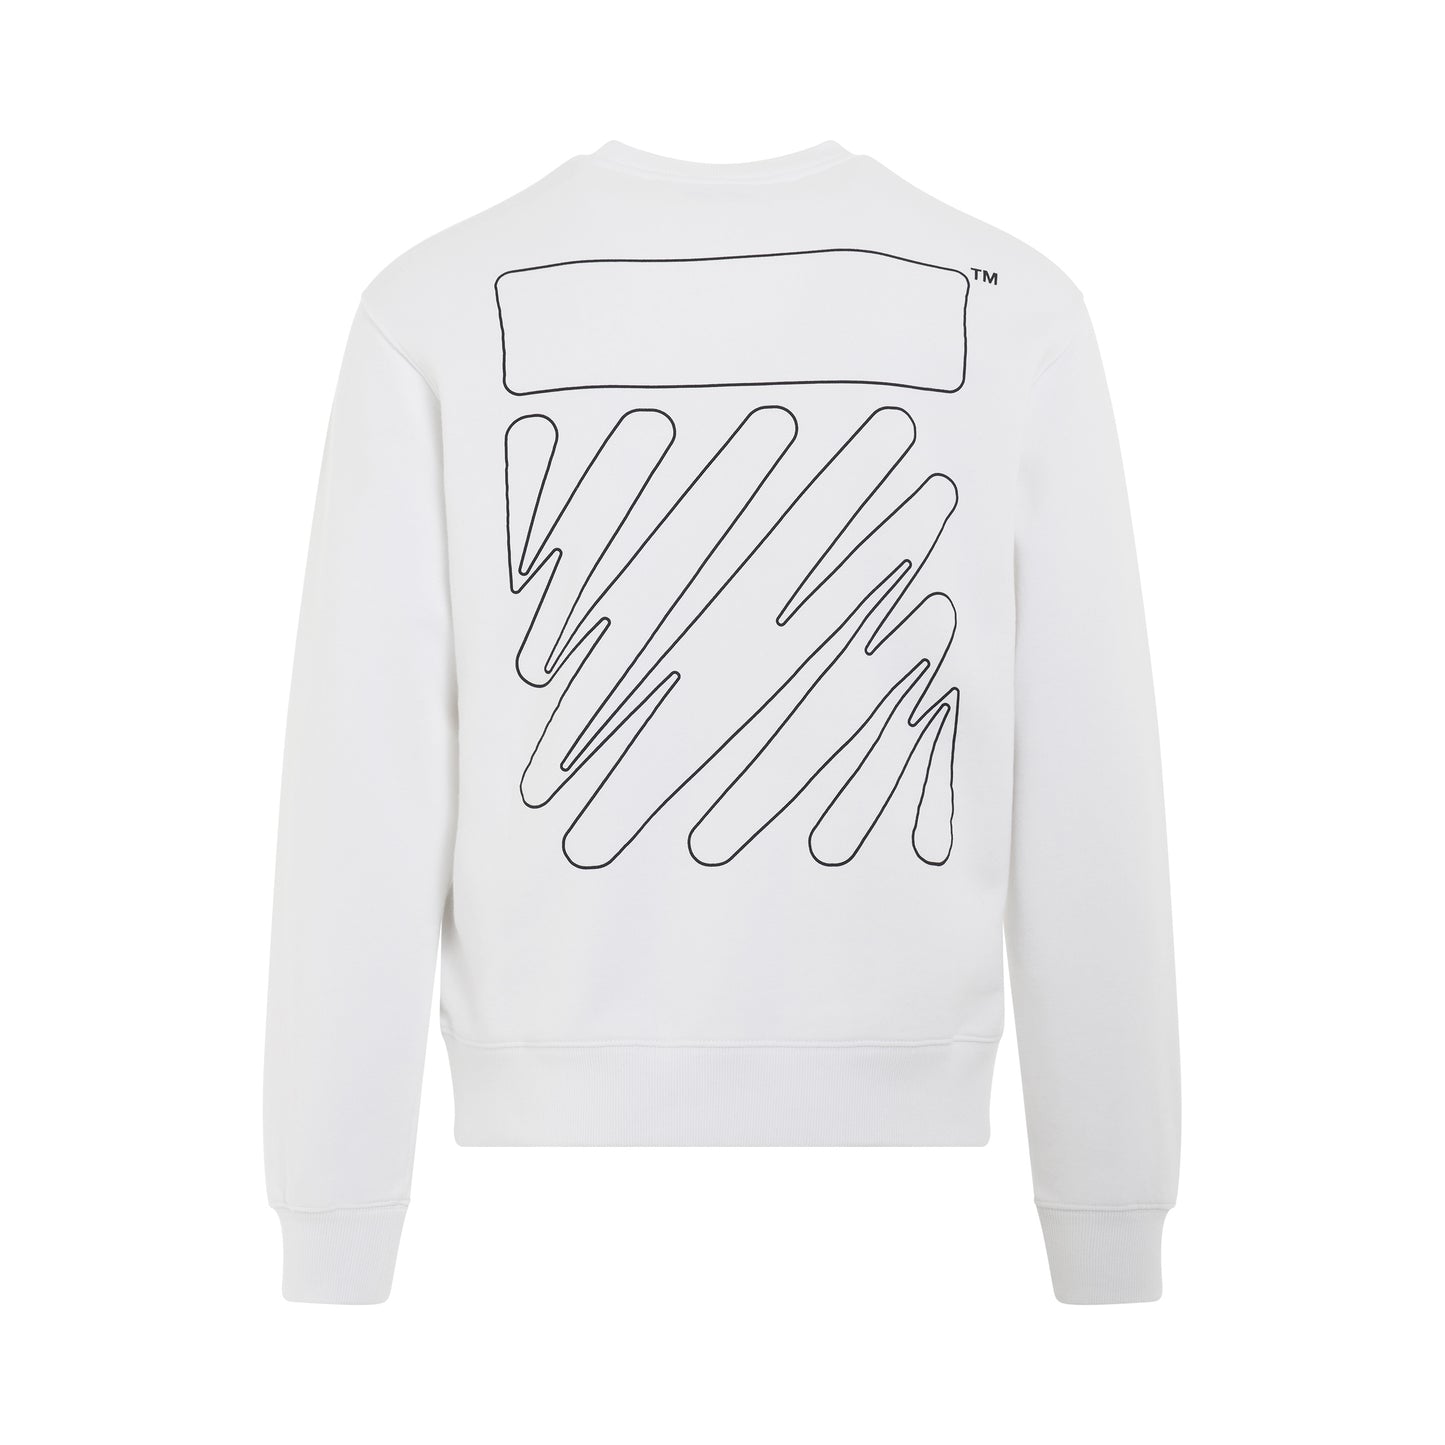 Wave Outline Diagonal Crewneck Sweatshirt in White/Black